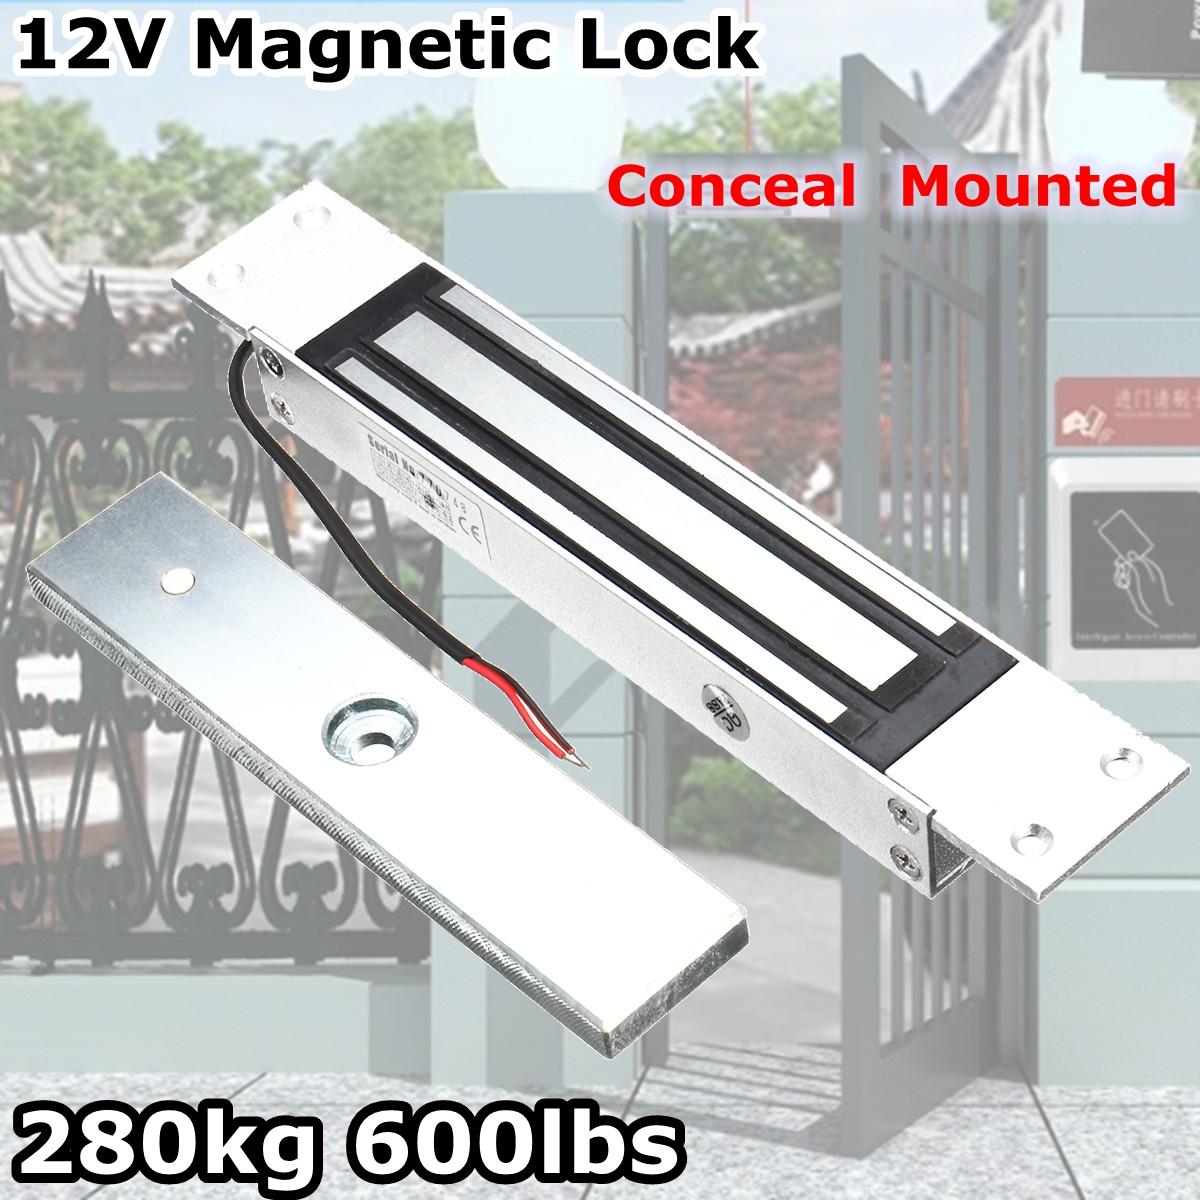 12V-Electric-Magnetic-Entry-Door-Lock-Electromagnetic-Access-Control-280KG-600LB-1334561-1